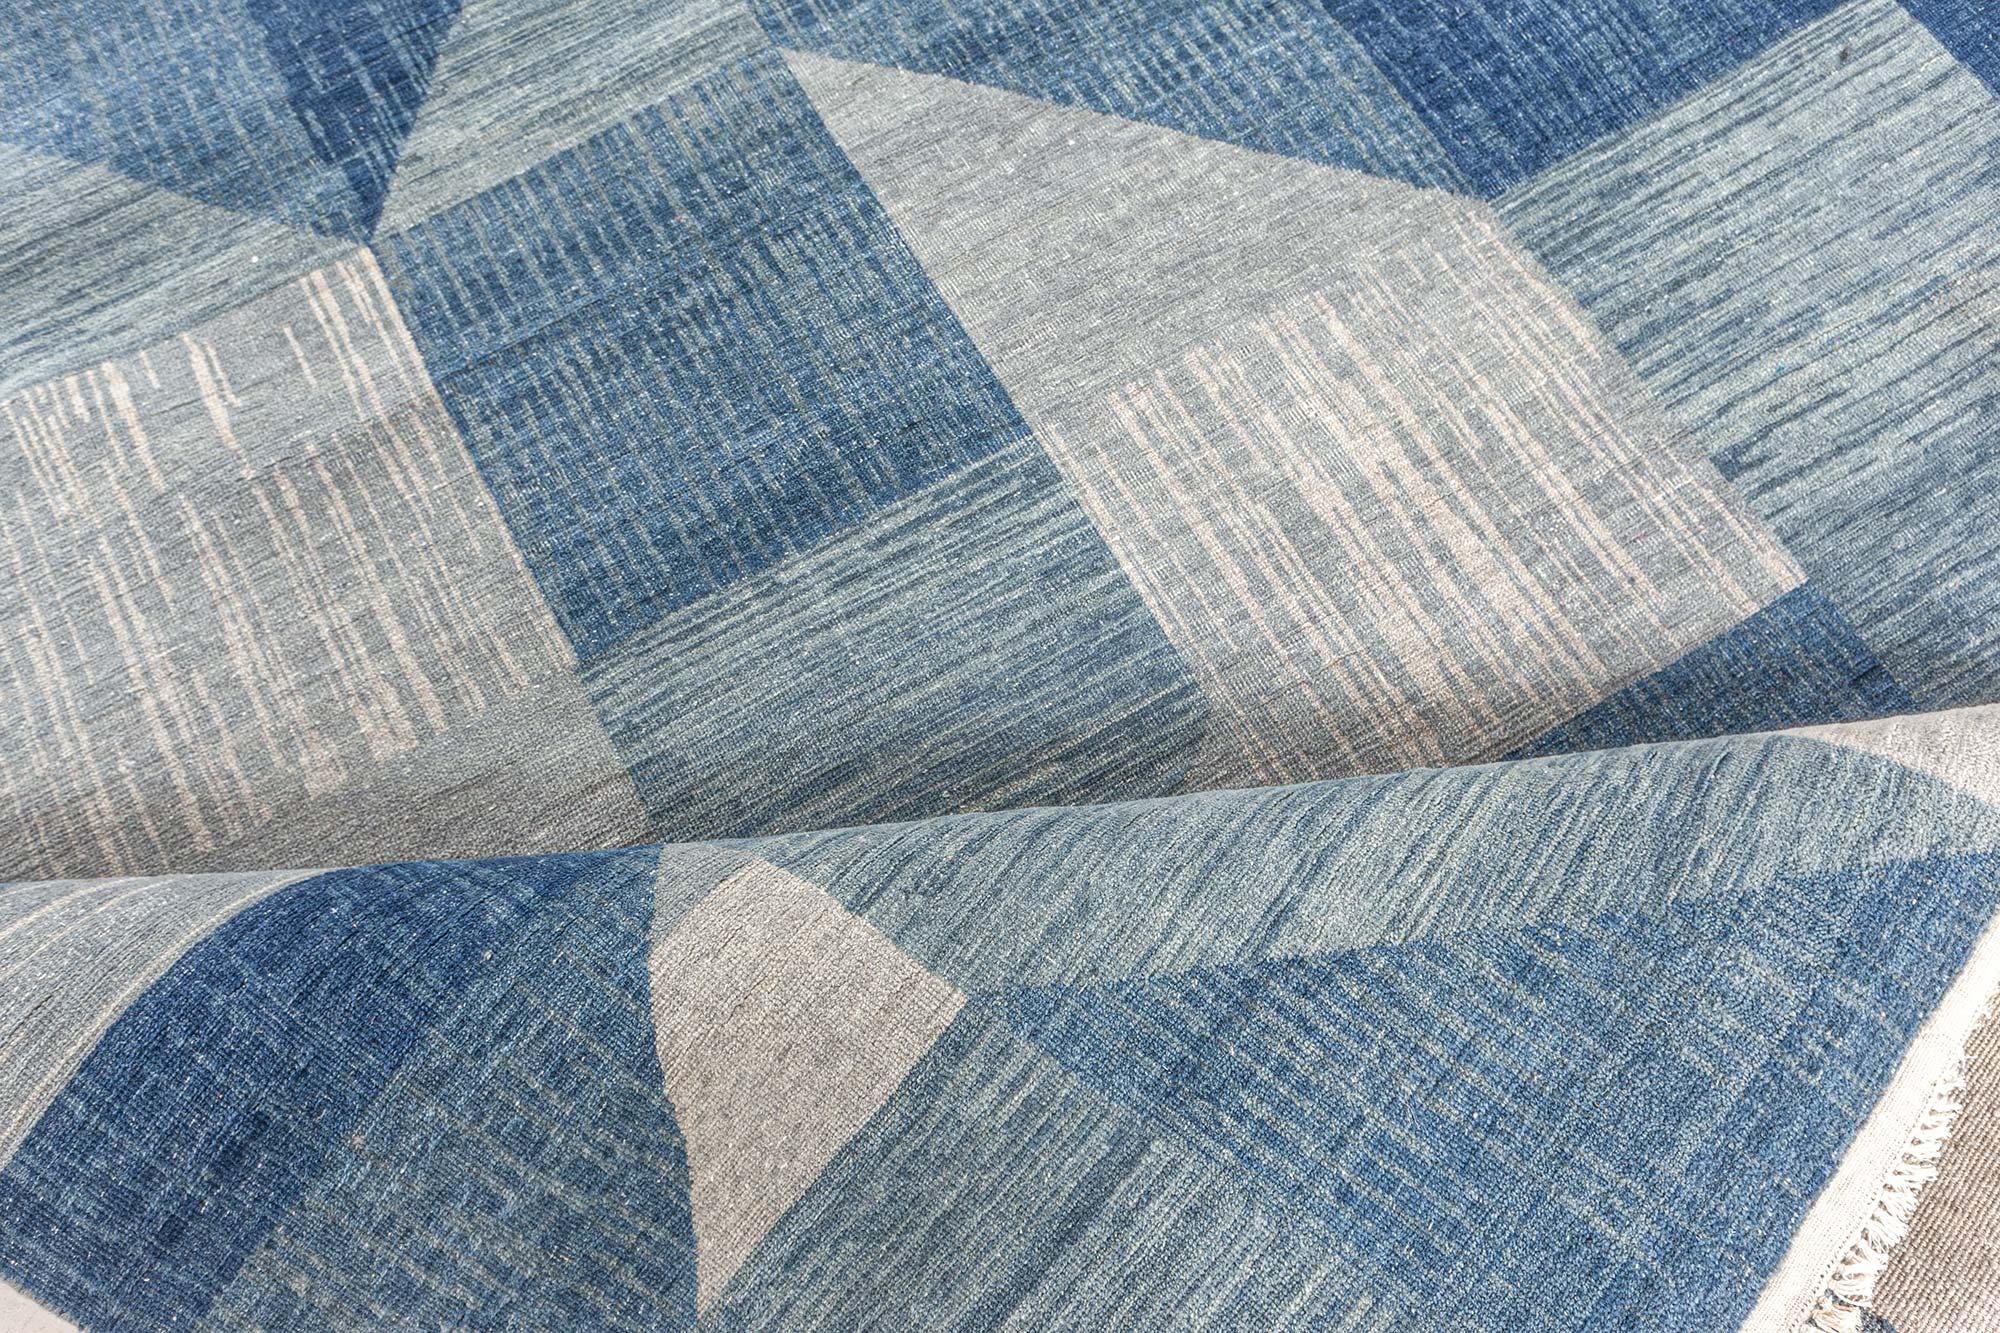 Contemporary geometric rug by Doris Leslie Blau.
Size: 11'10